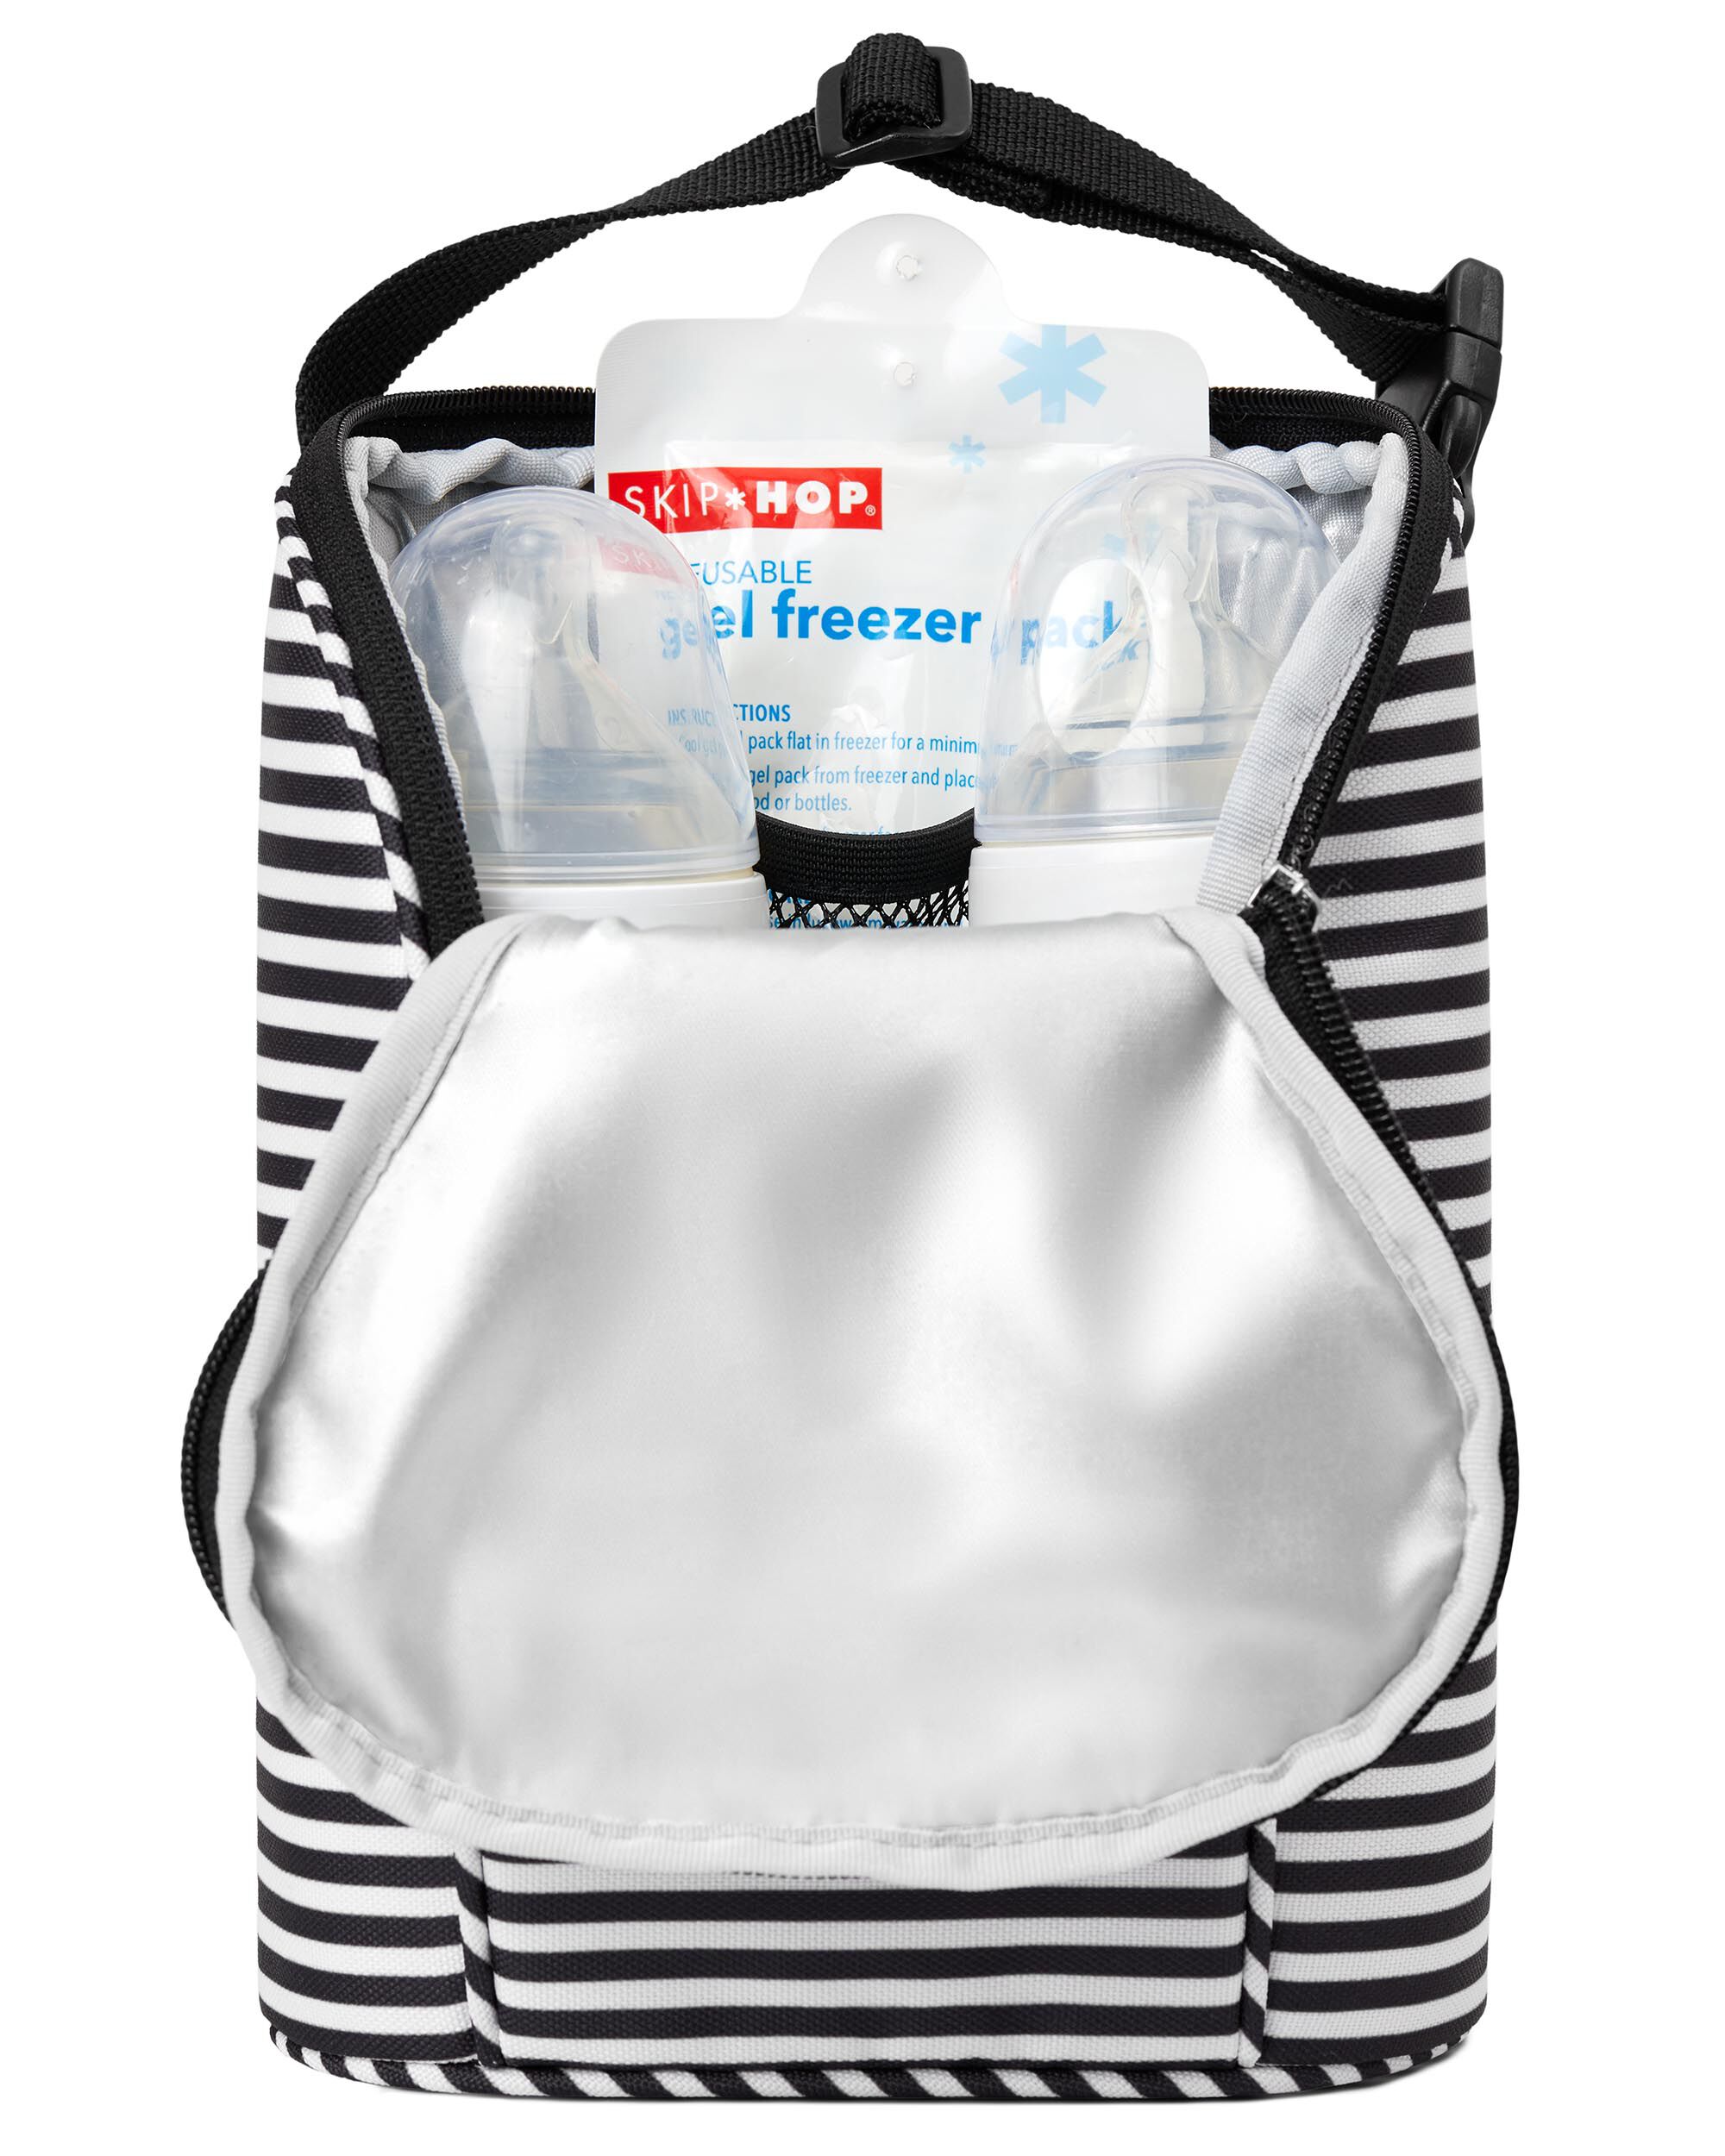 skip hop insulated breastmilk cooler and baby bottle bag